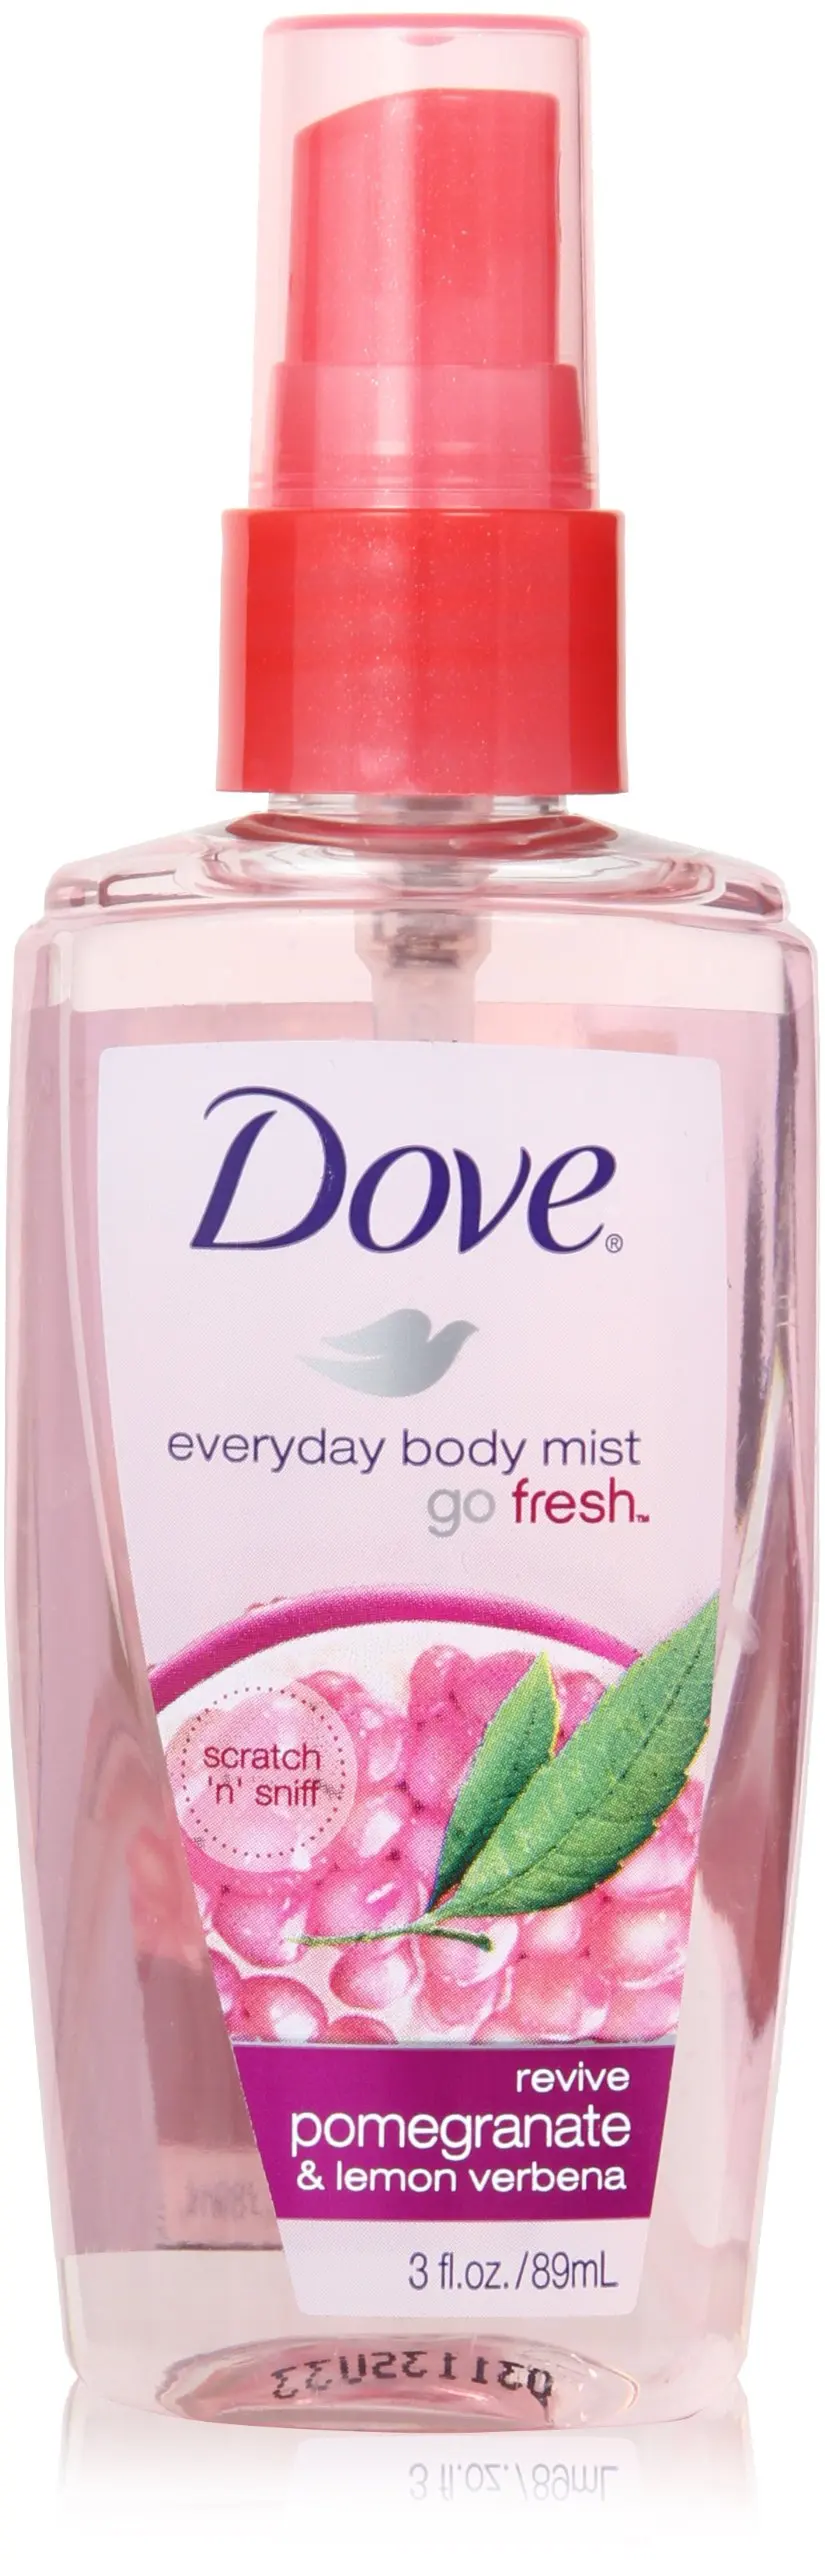 go fresh body mist dove